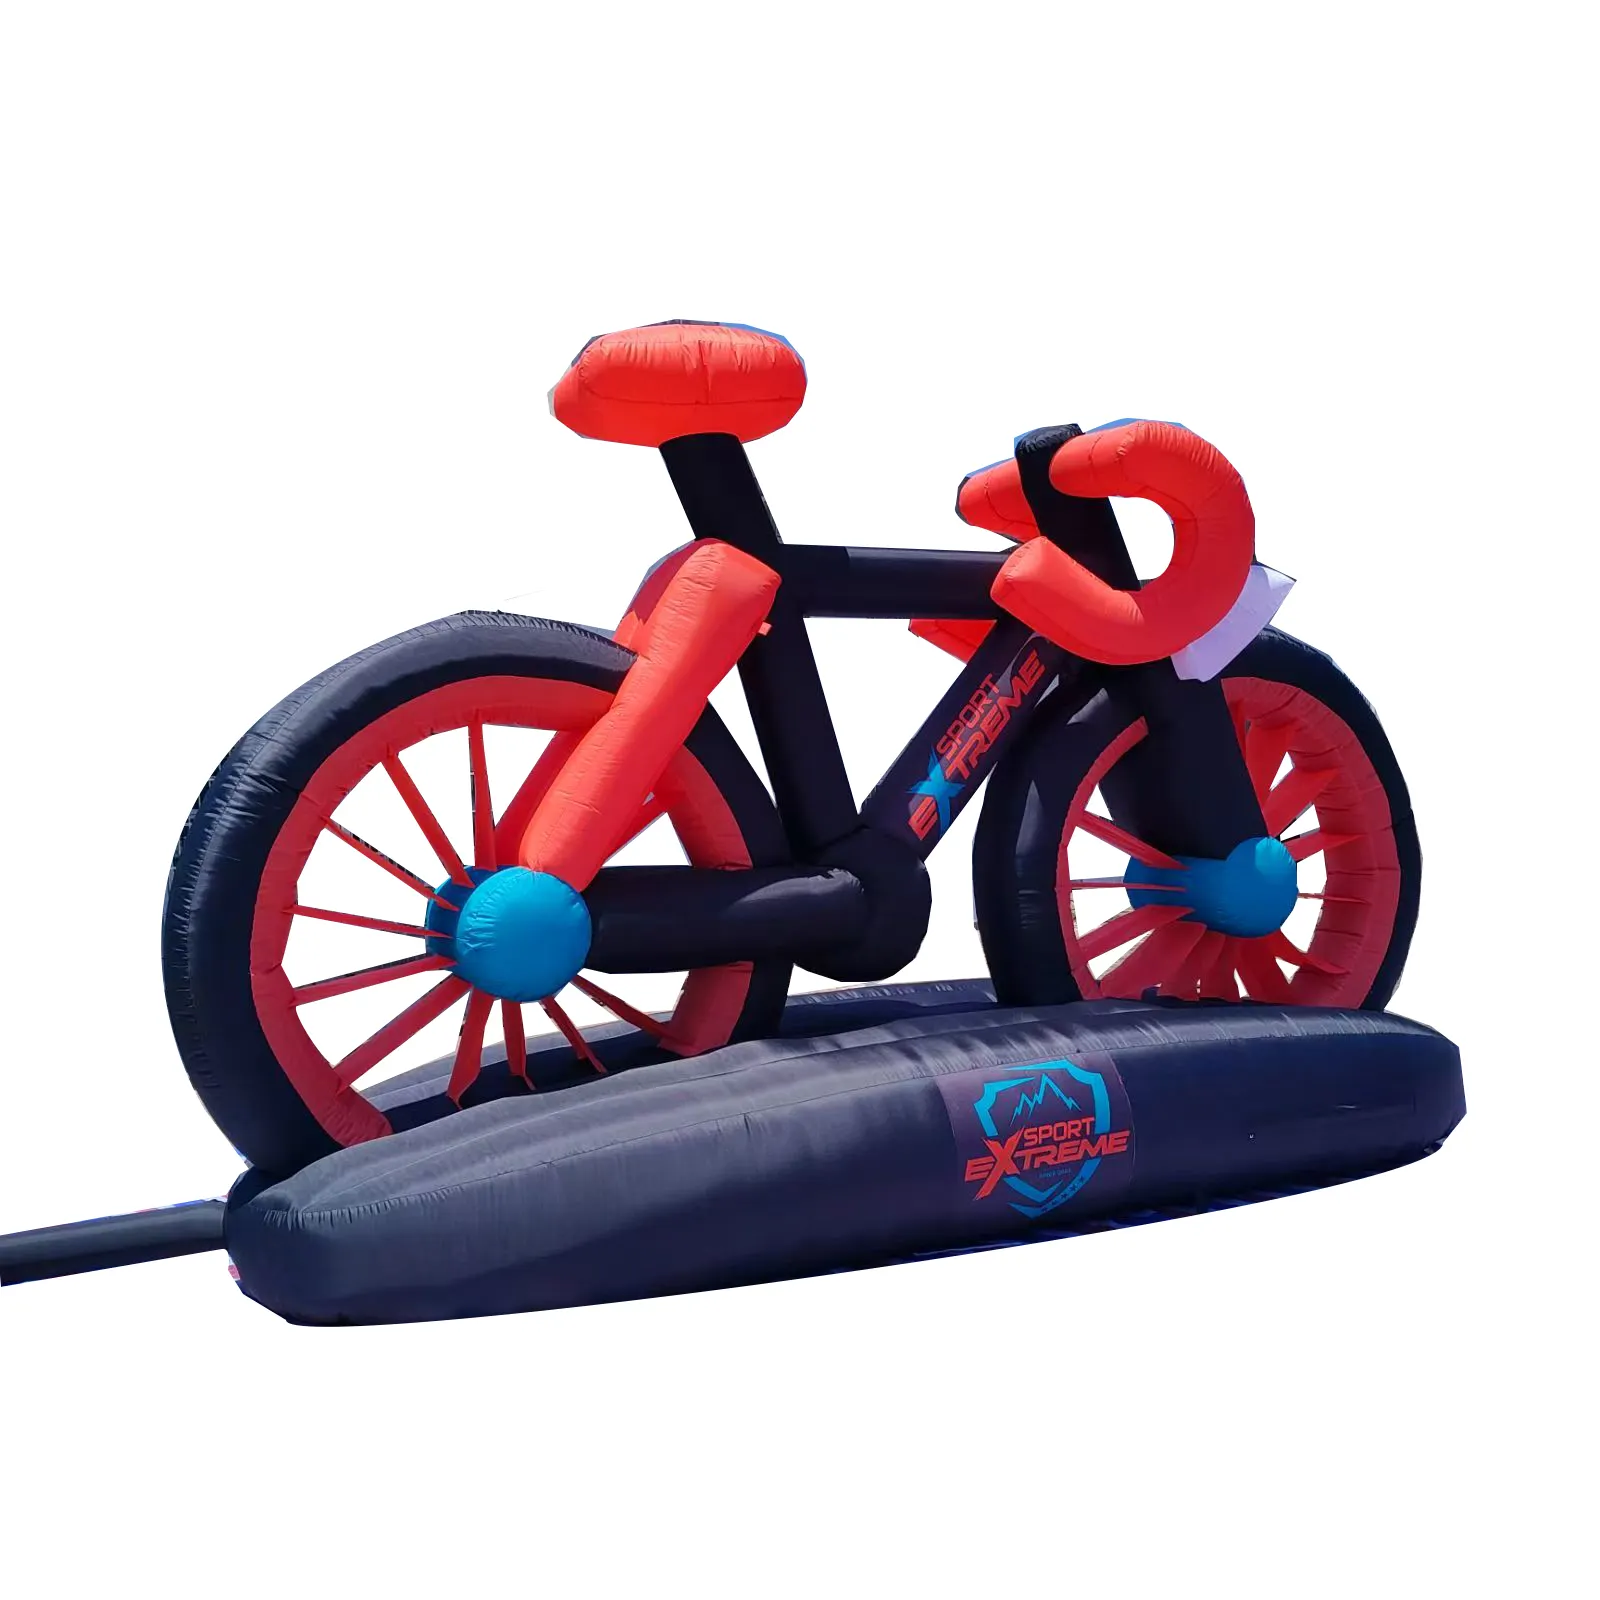 Bicicleta inflable gigante de 2,5 mH personalizada, modelo de bicicleta inflable publicitaria para promoción y decoración